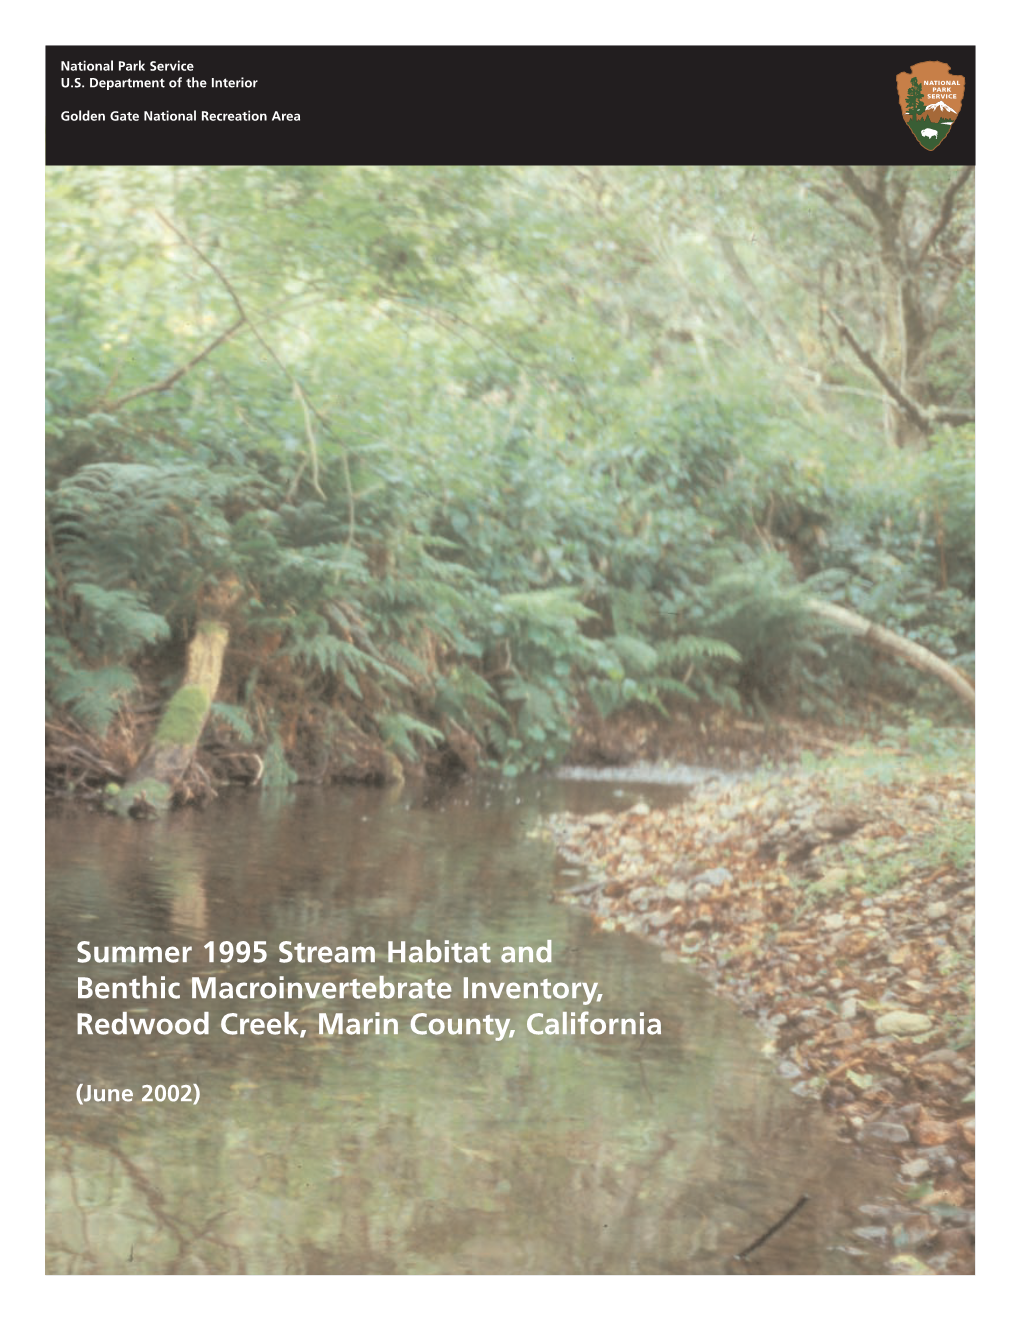 Summer 1995 Stream Habitat and Benthic Macroinvertebrate Inventory, Redwood Creek, Marin County, California